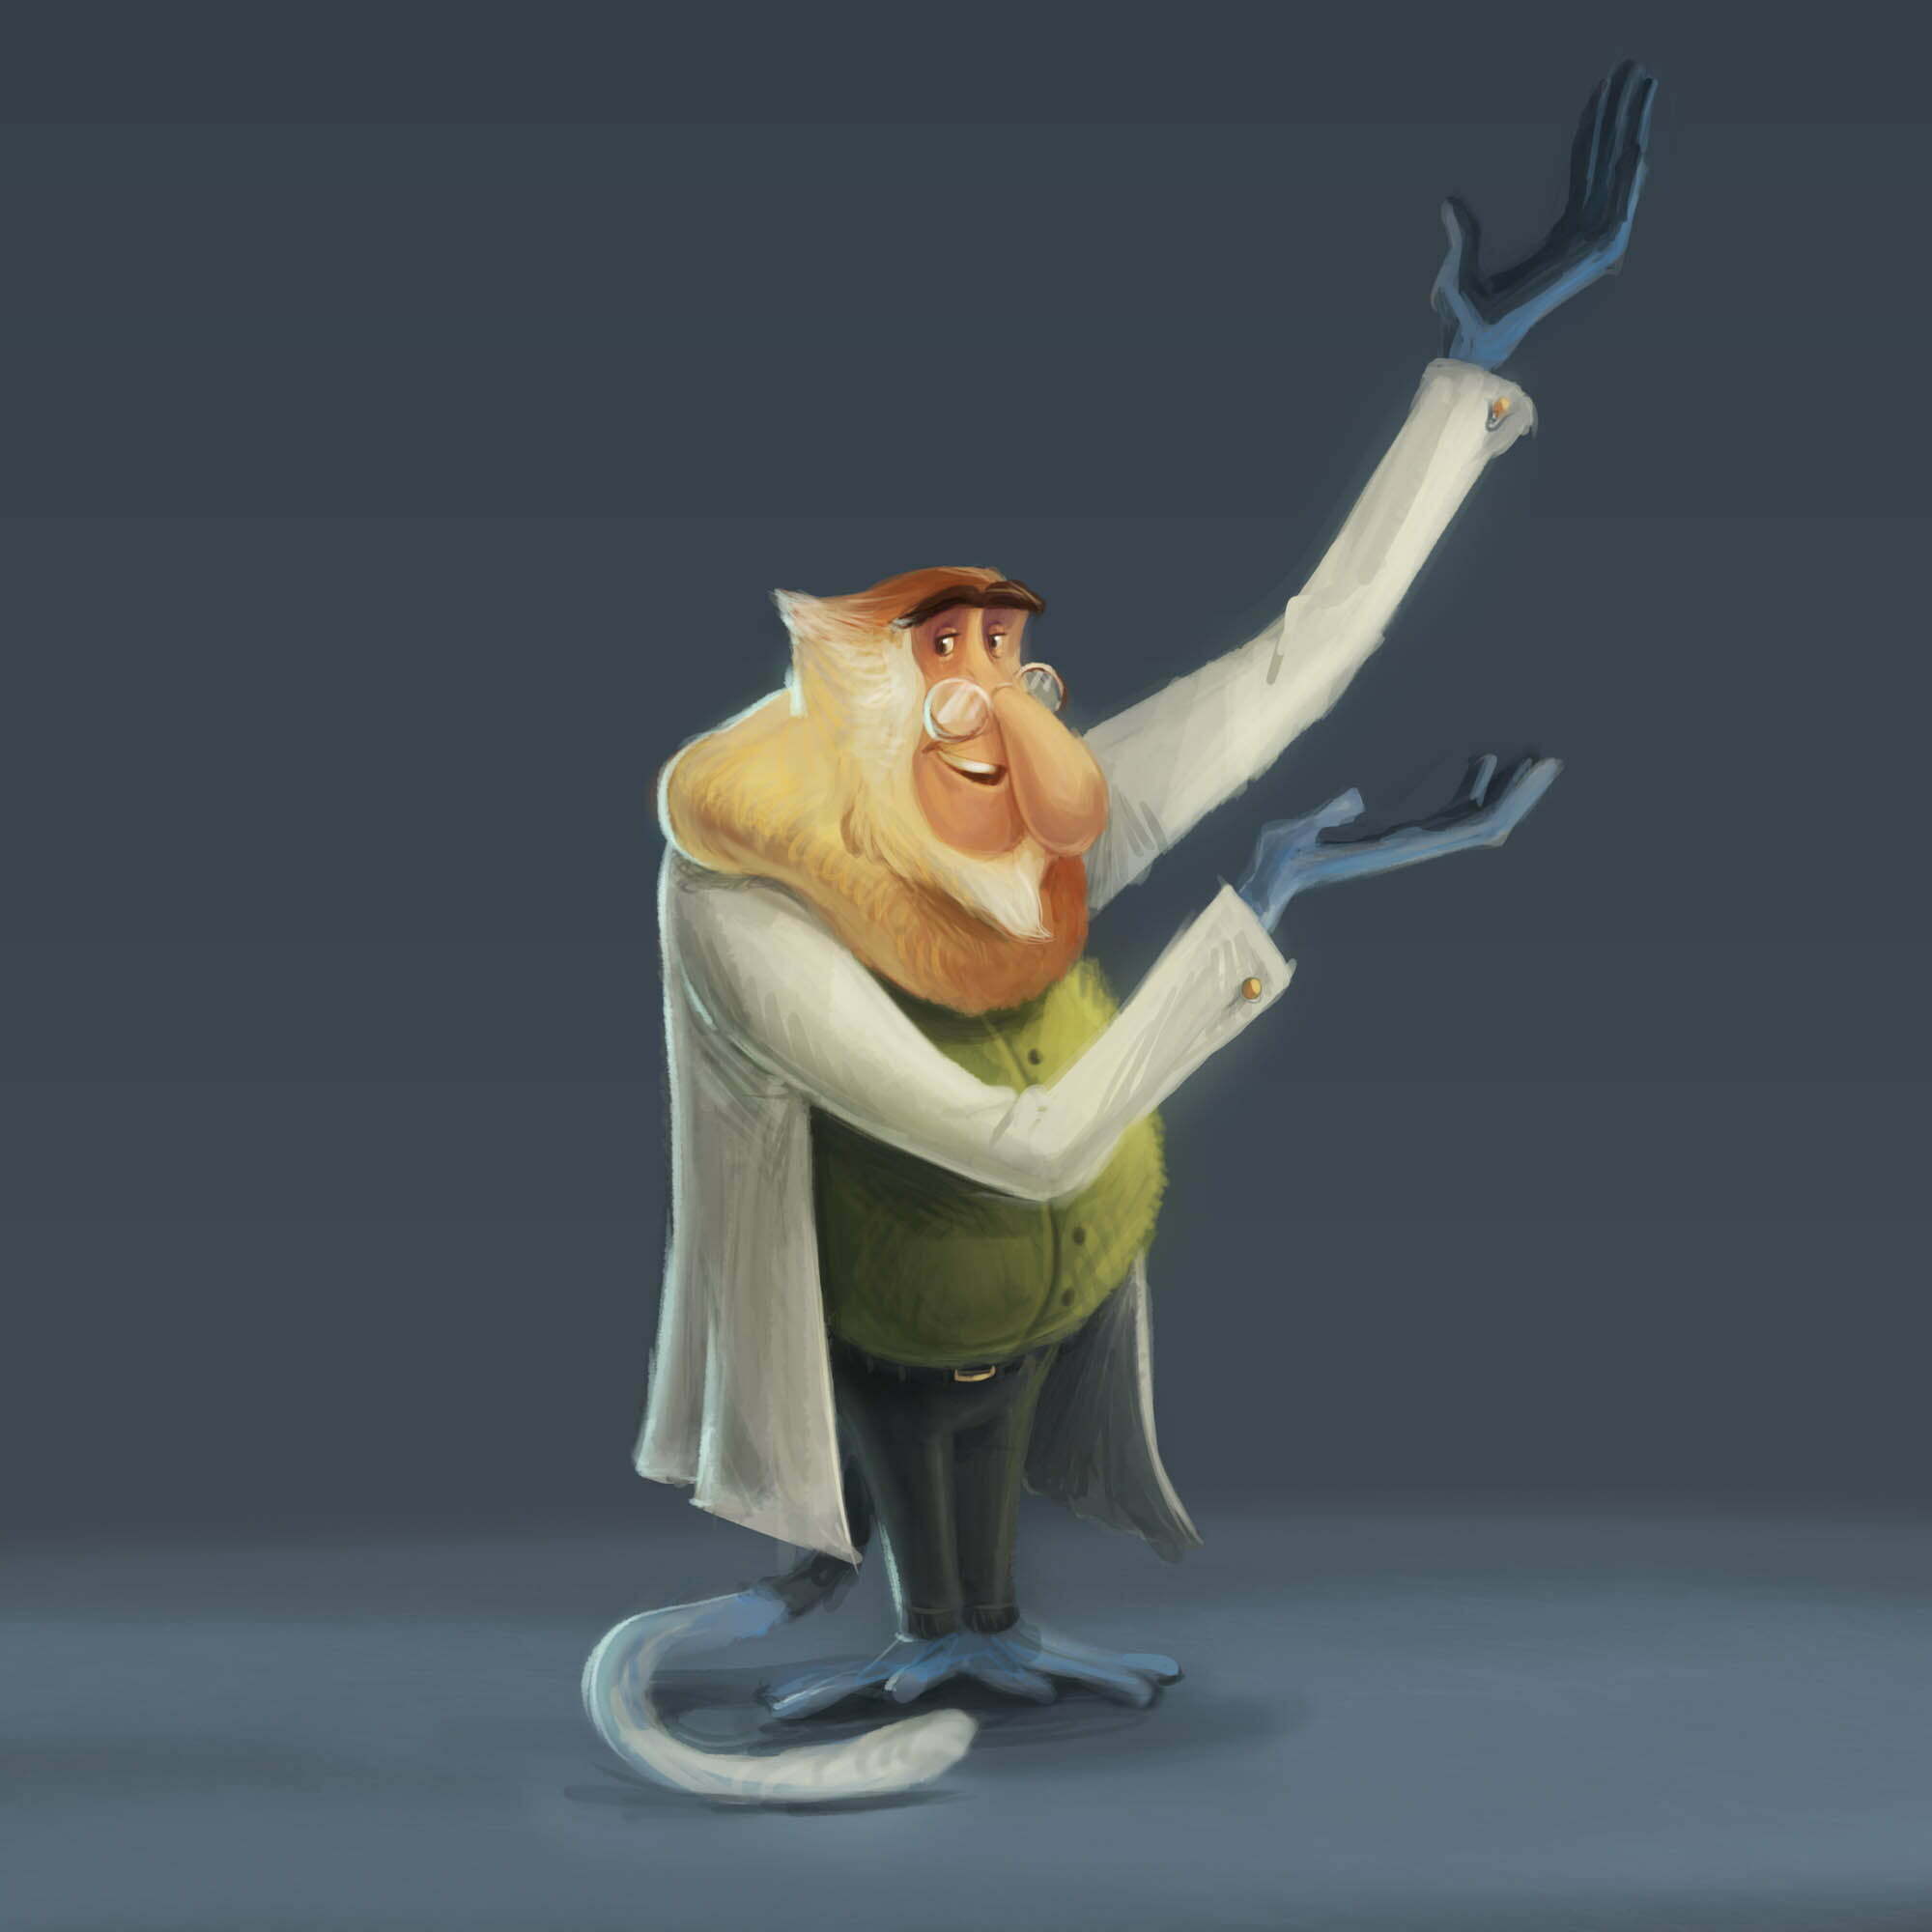 2D Monkey Scientist Character Illustration